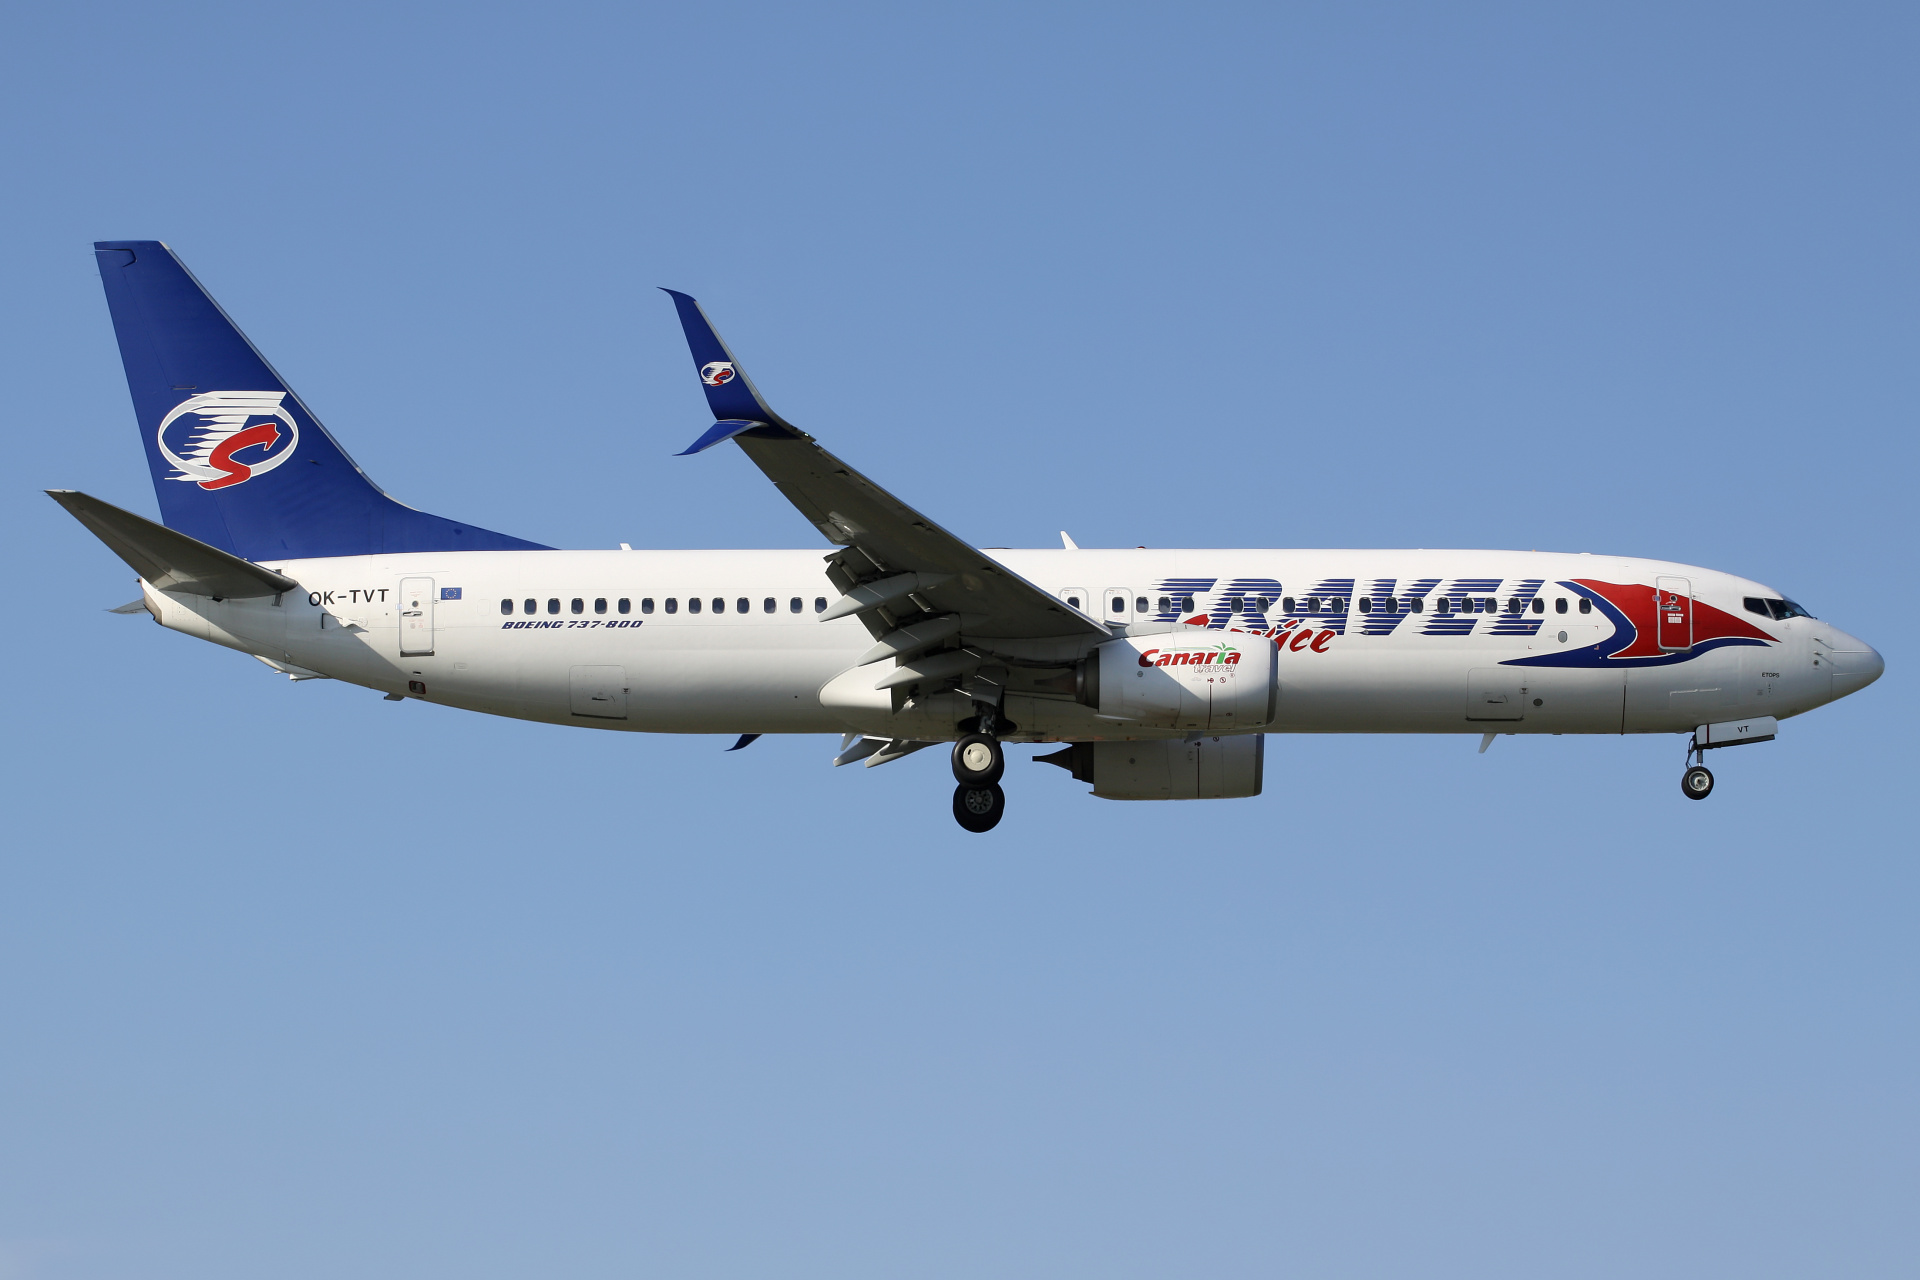 OK-TVT (scimitar winglets) (Aircraft » EPWA Spotting » Boeing 737-800 » Travel Service Airlines)